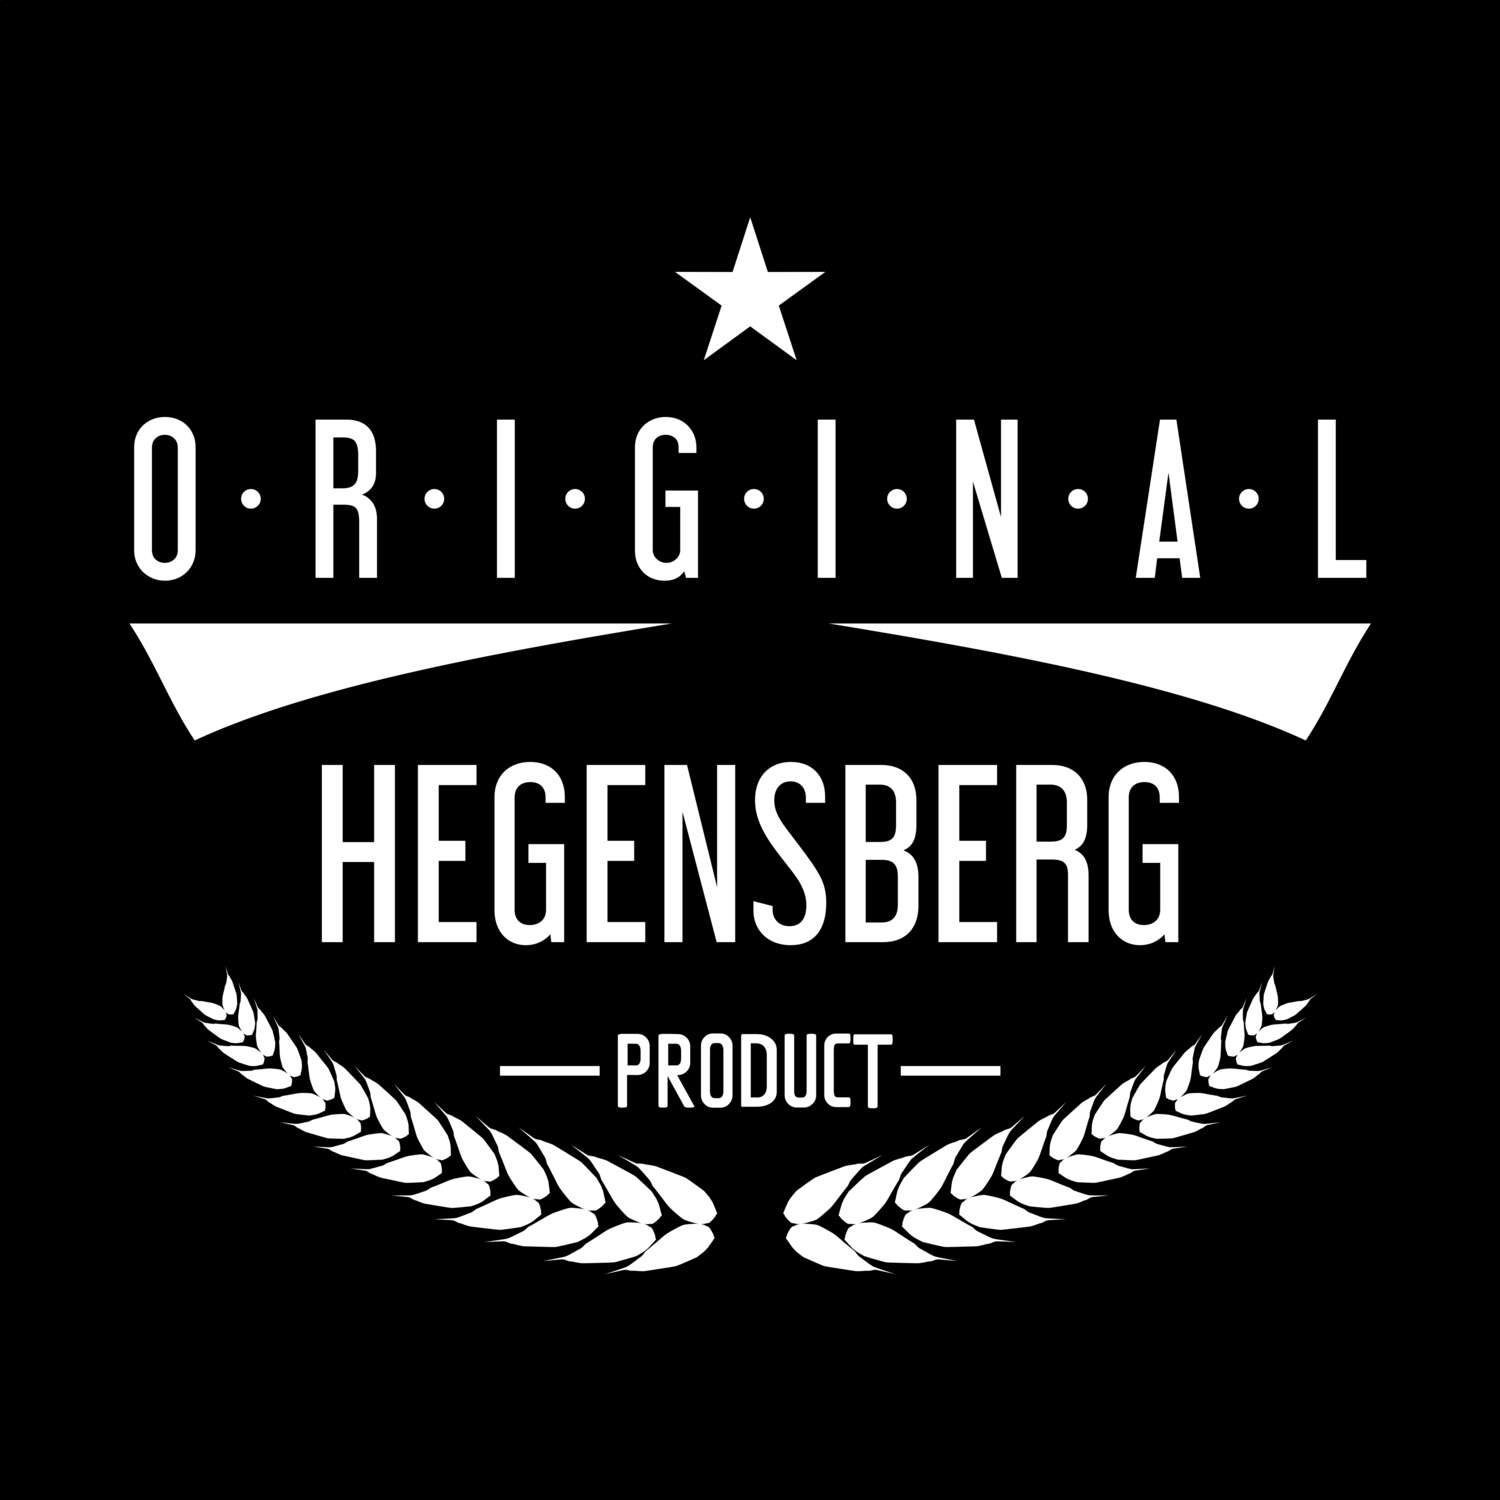 Hegensberg T-Shirt »Original Product«